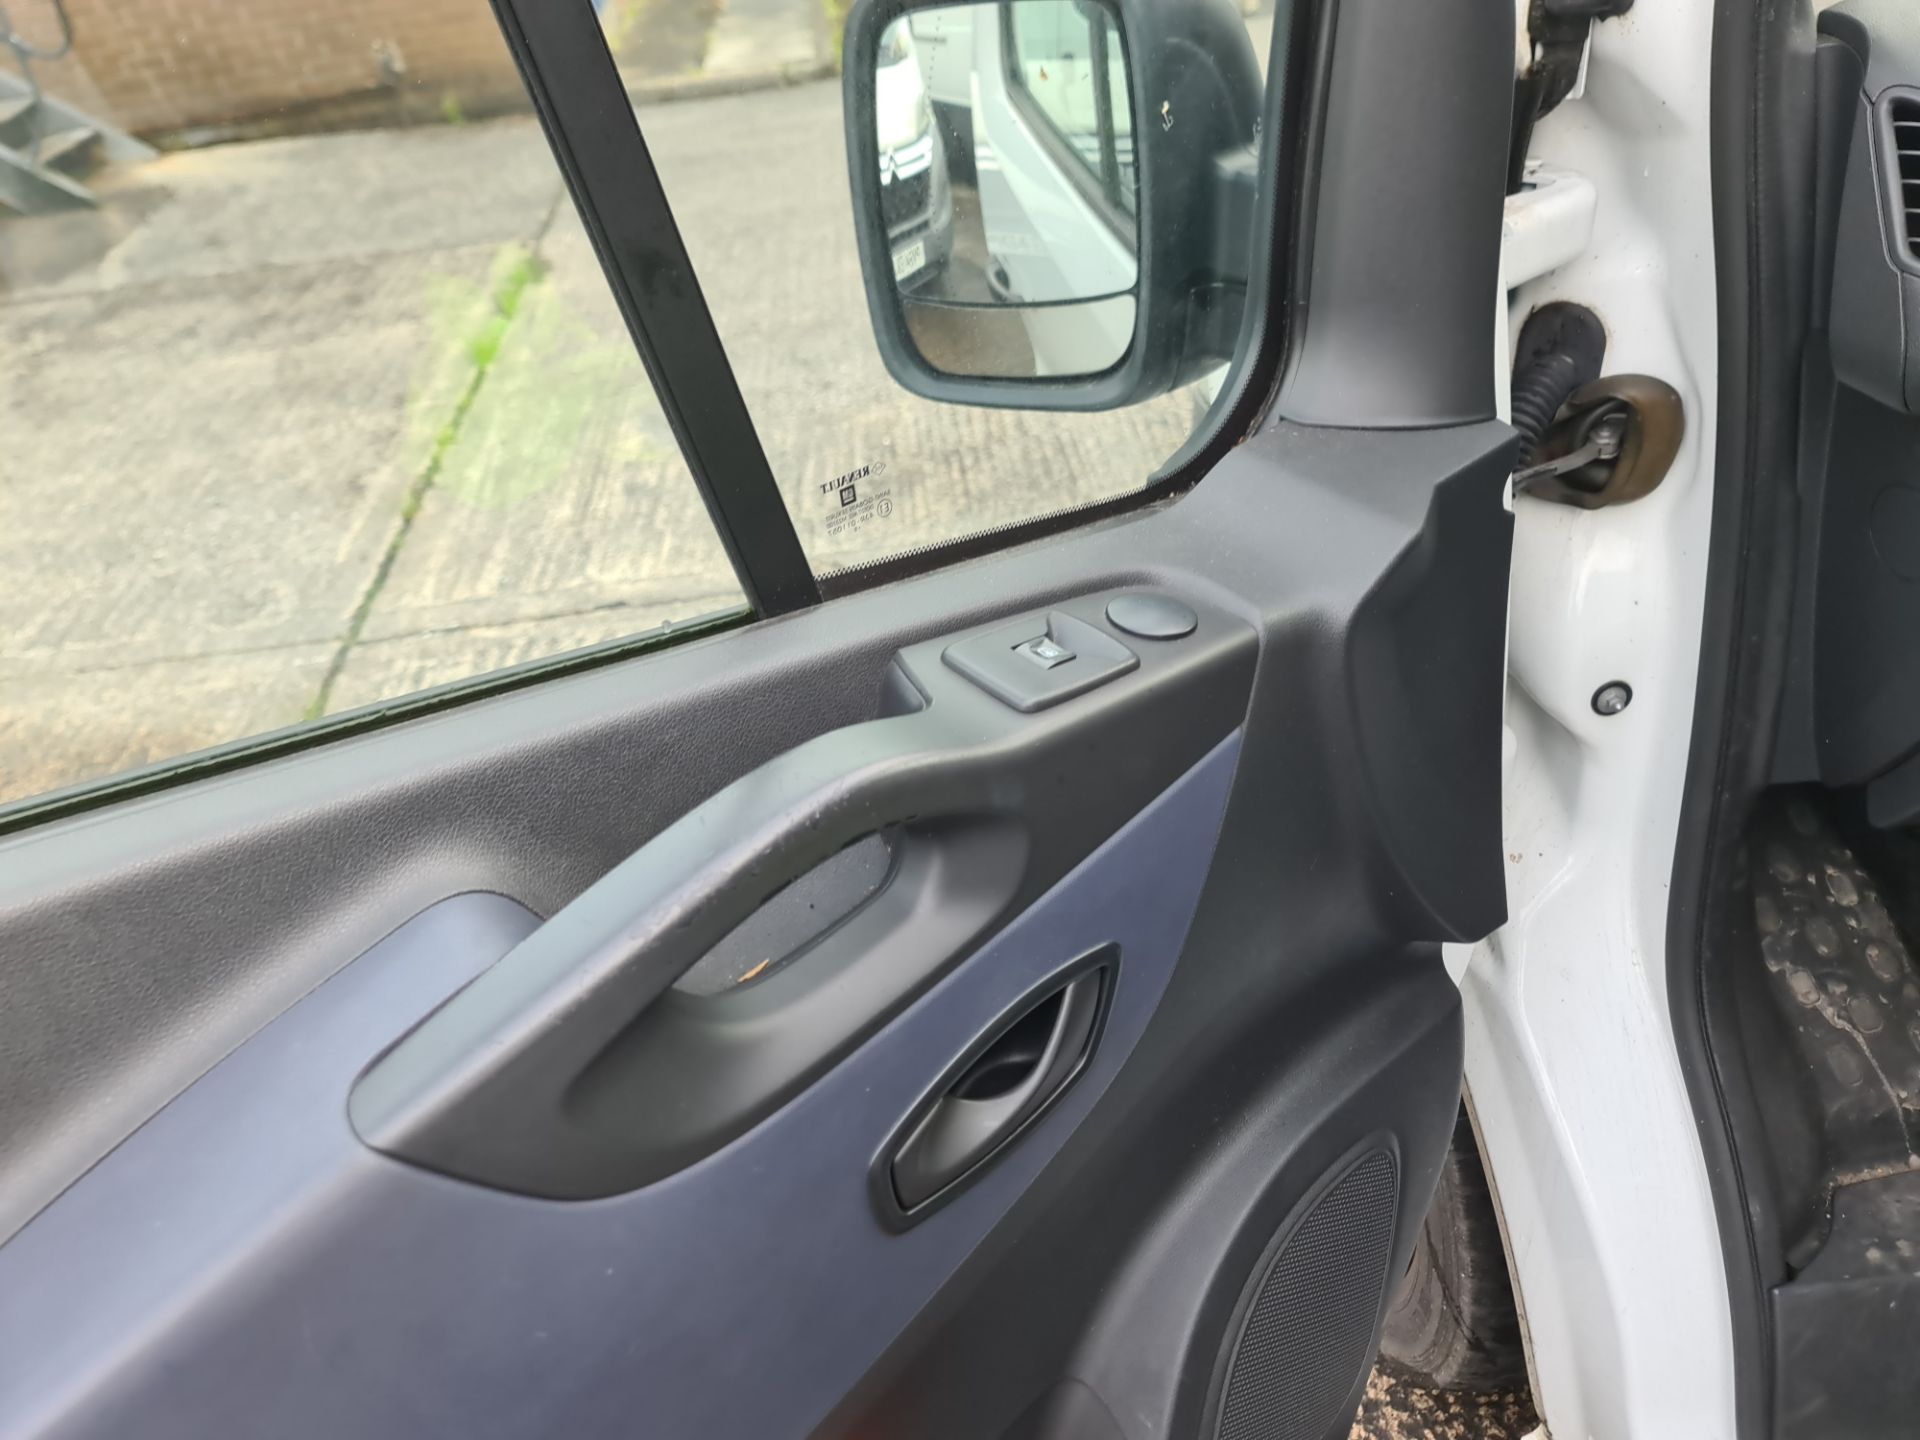 2015 Vauxhall Vivaro 2900 CDTi panel van - Image 53 of 81